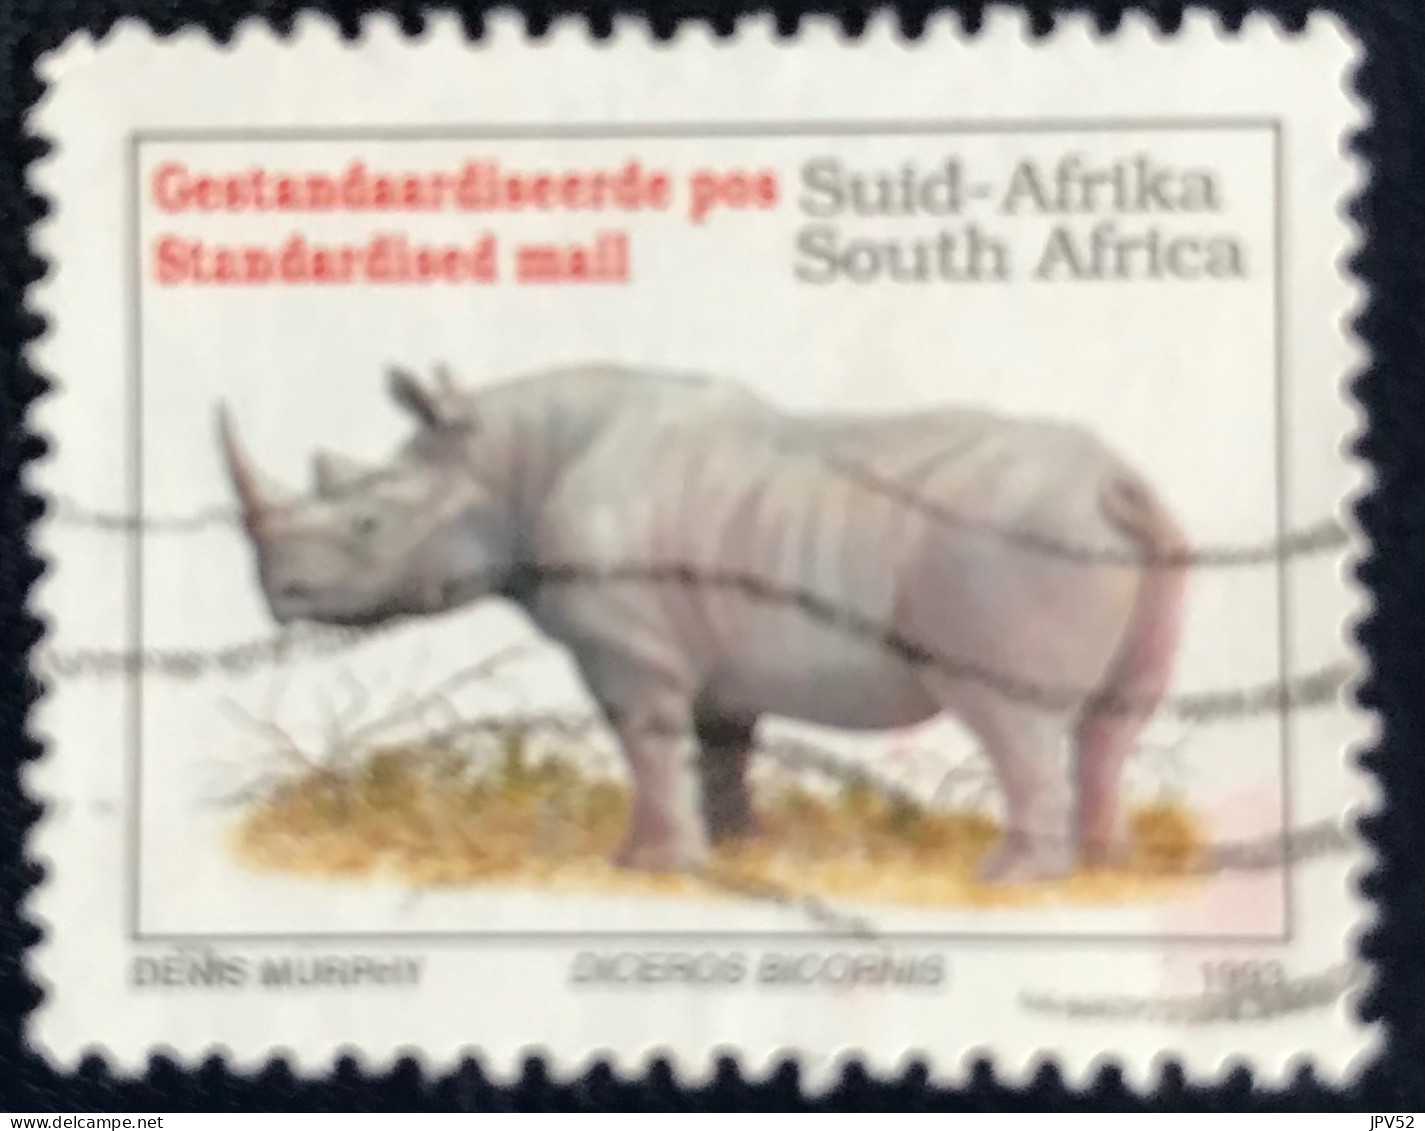 RSA - South Africa - Suid-Afrika  - C18/8 - 1996 - (°)used - Michel 896 - Bedreigde Dieren - Usados